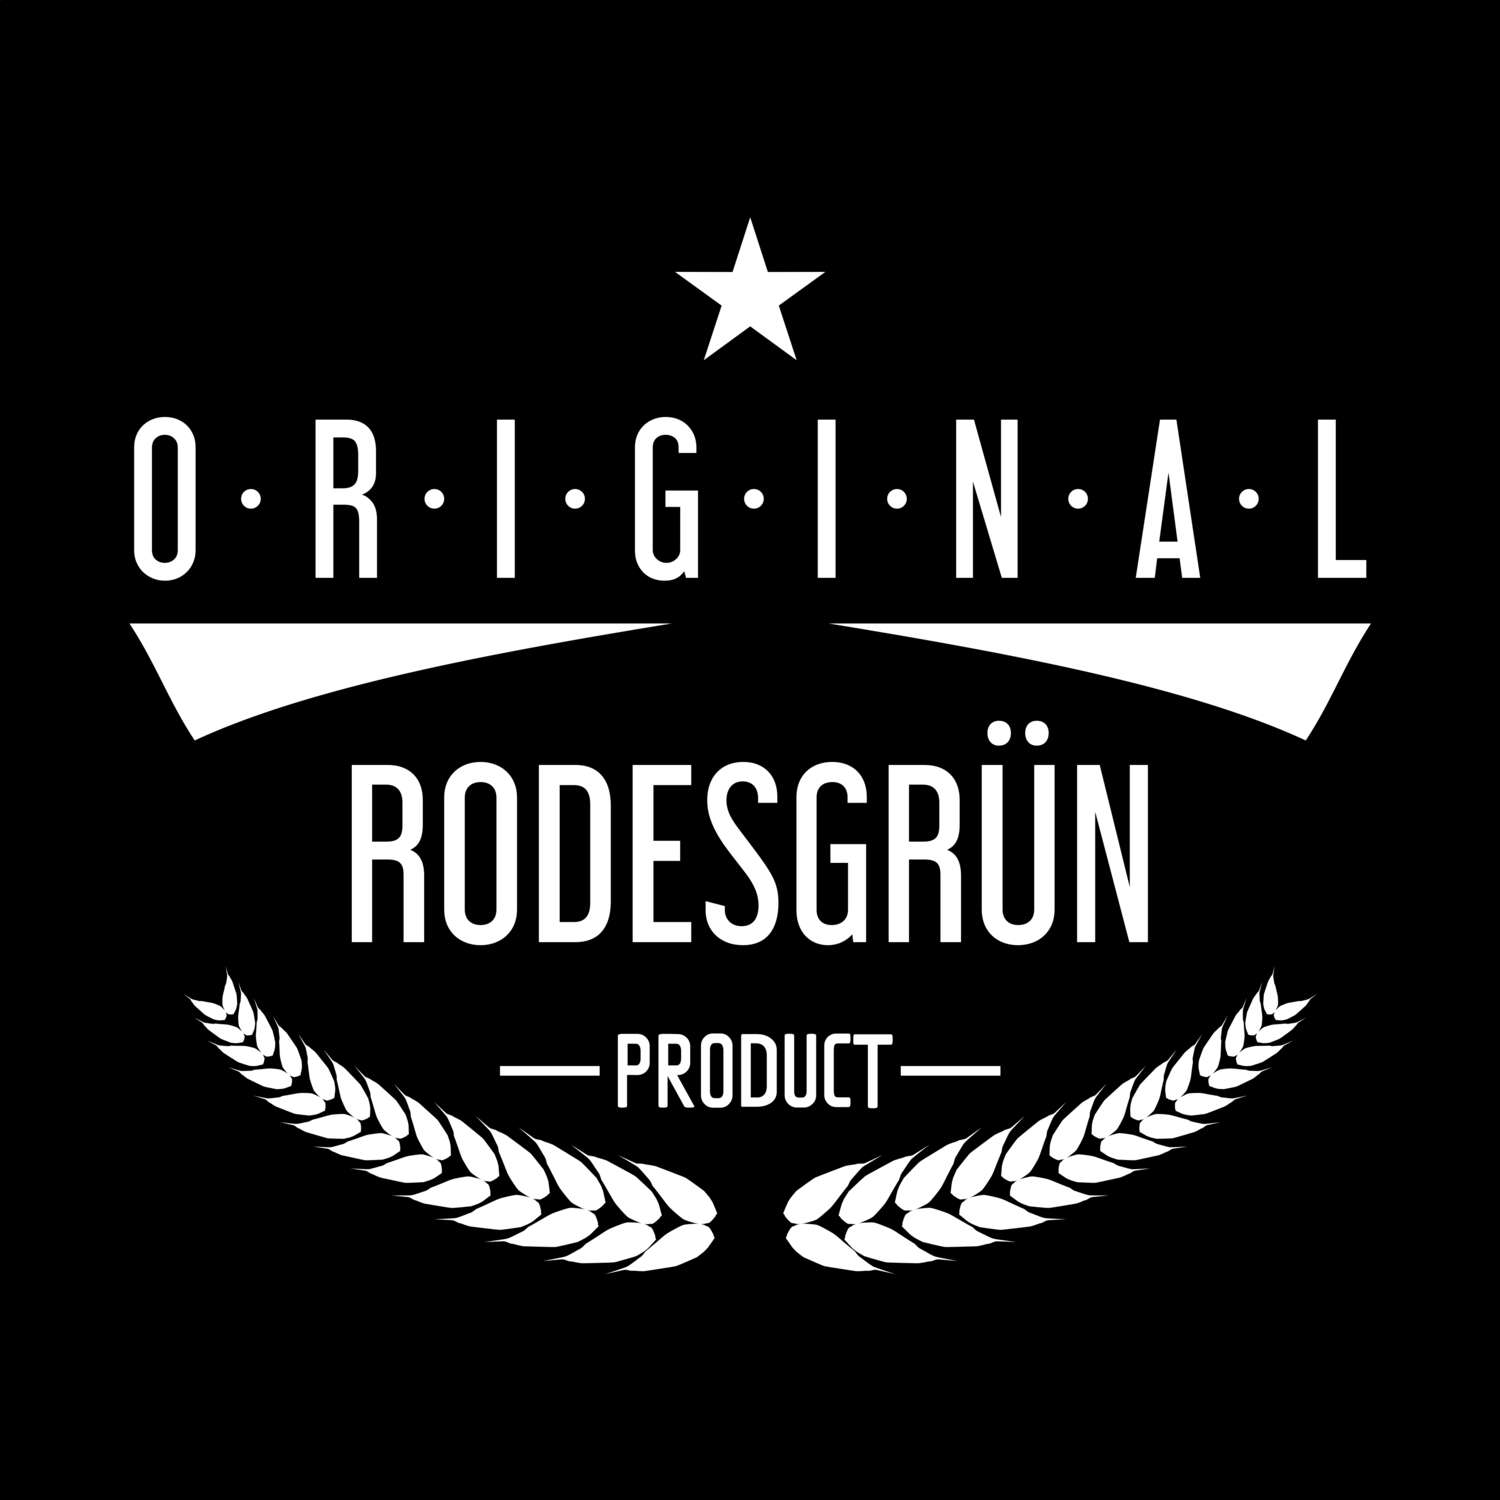 Rodesgrün T-Shirt »Original Product«